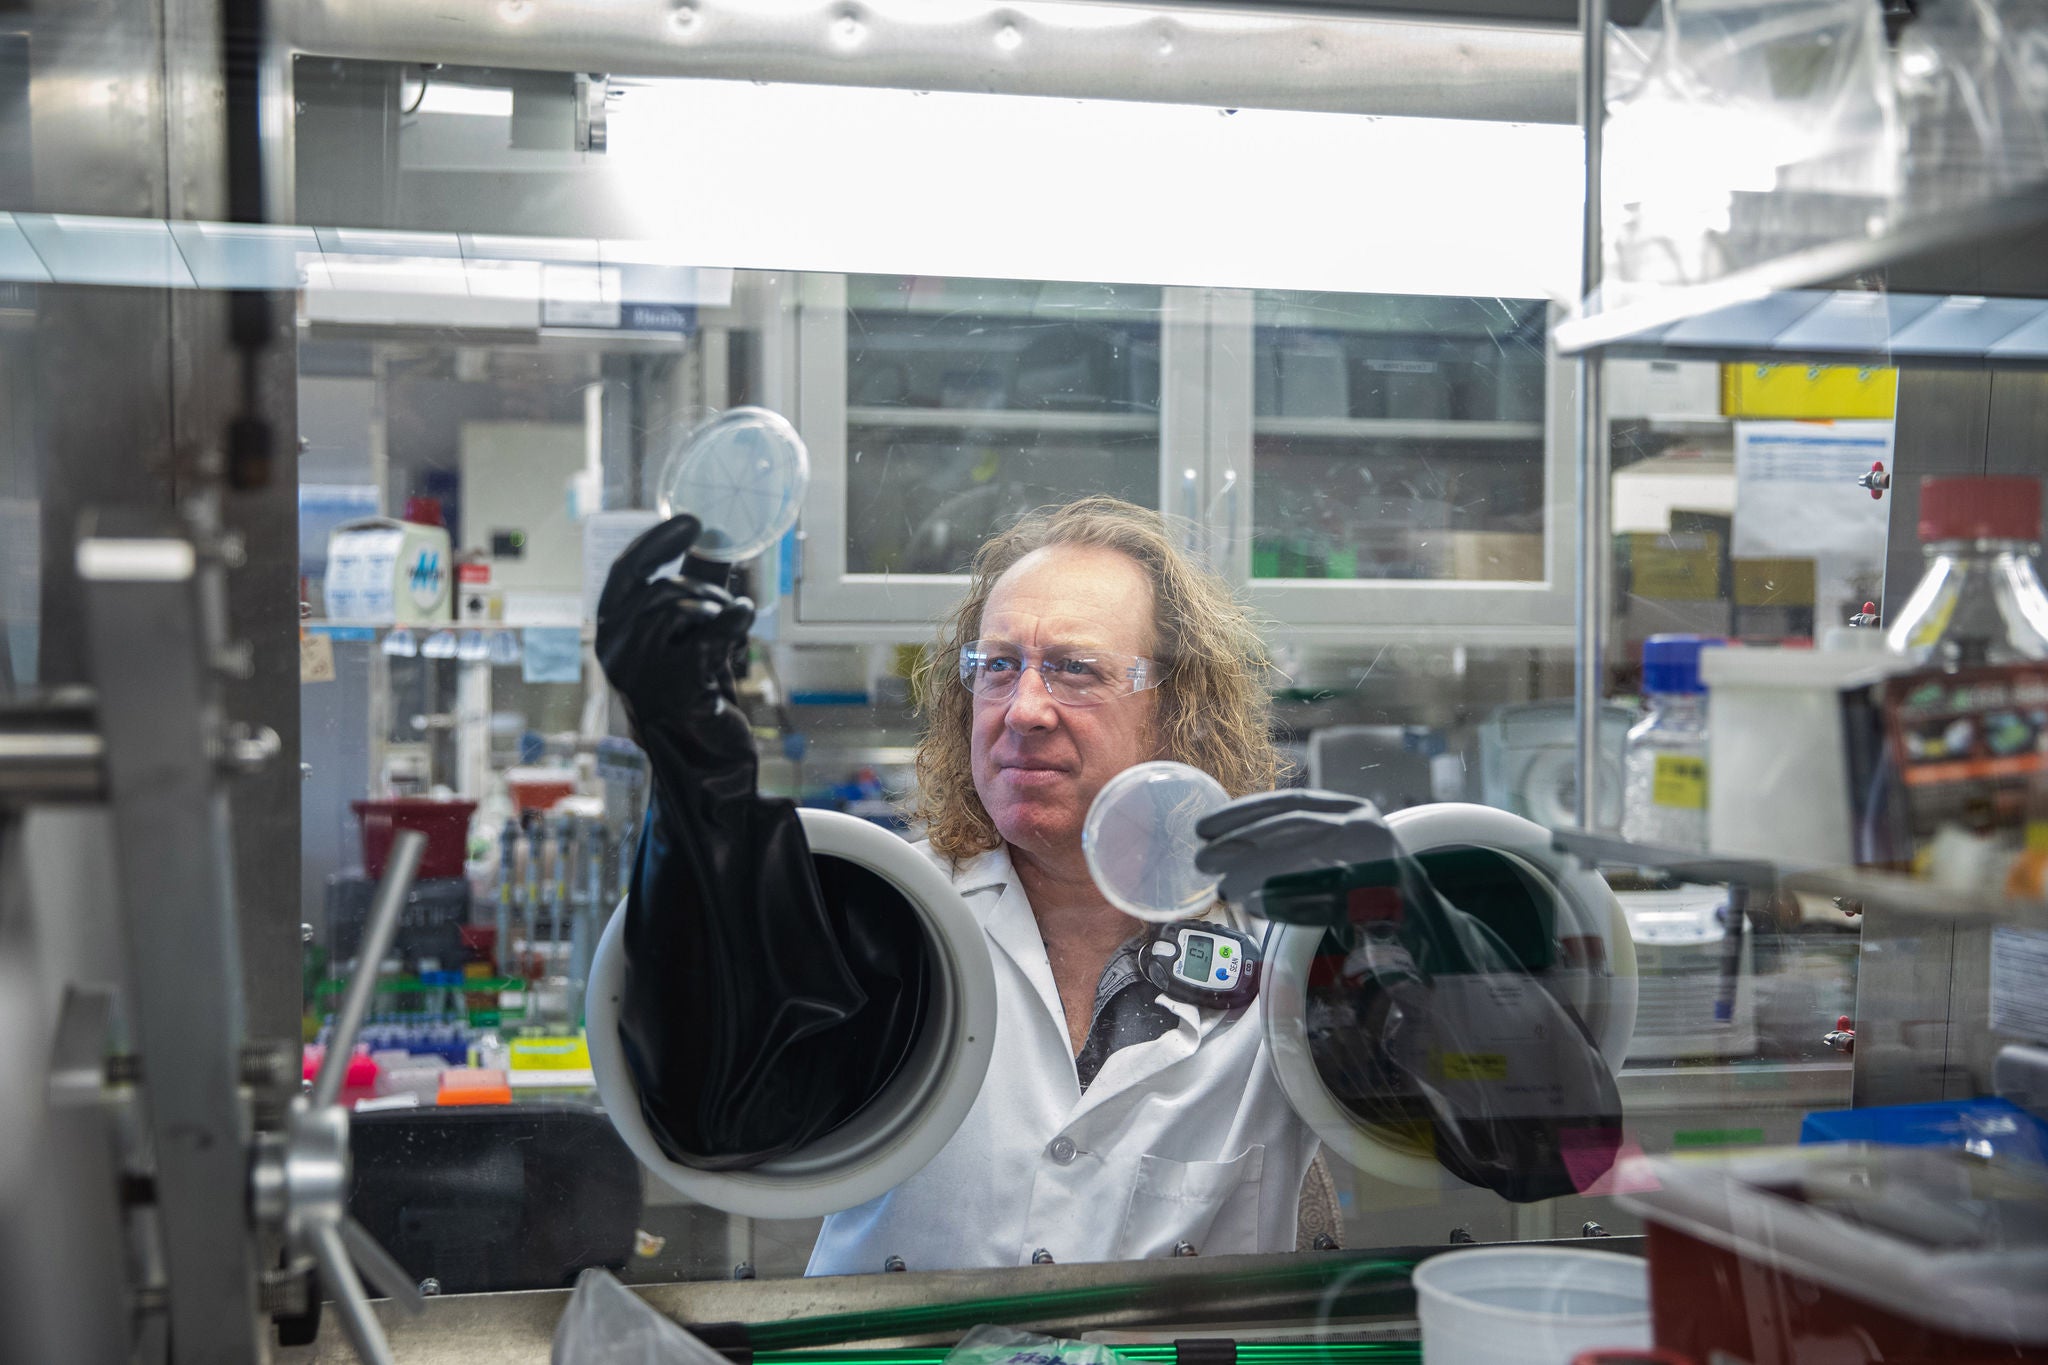 Sean Simpson examines samples in the lab